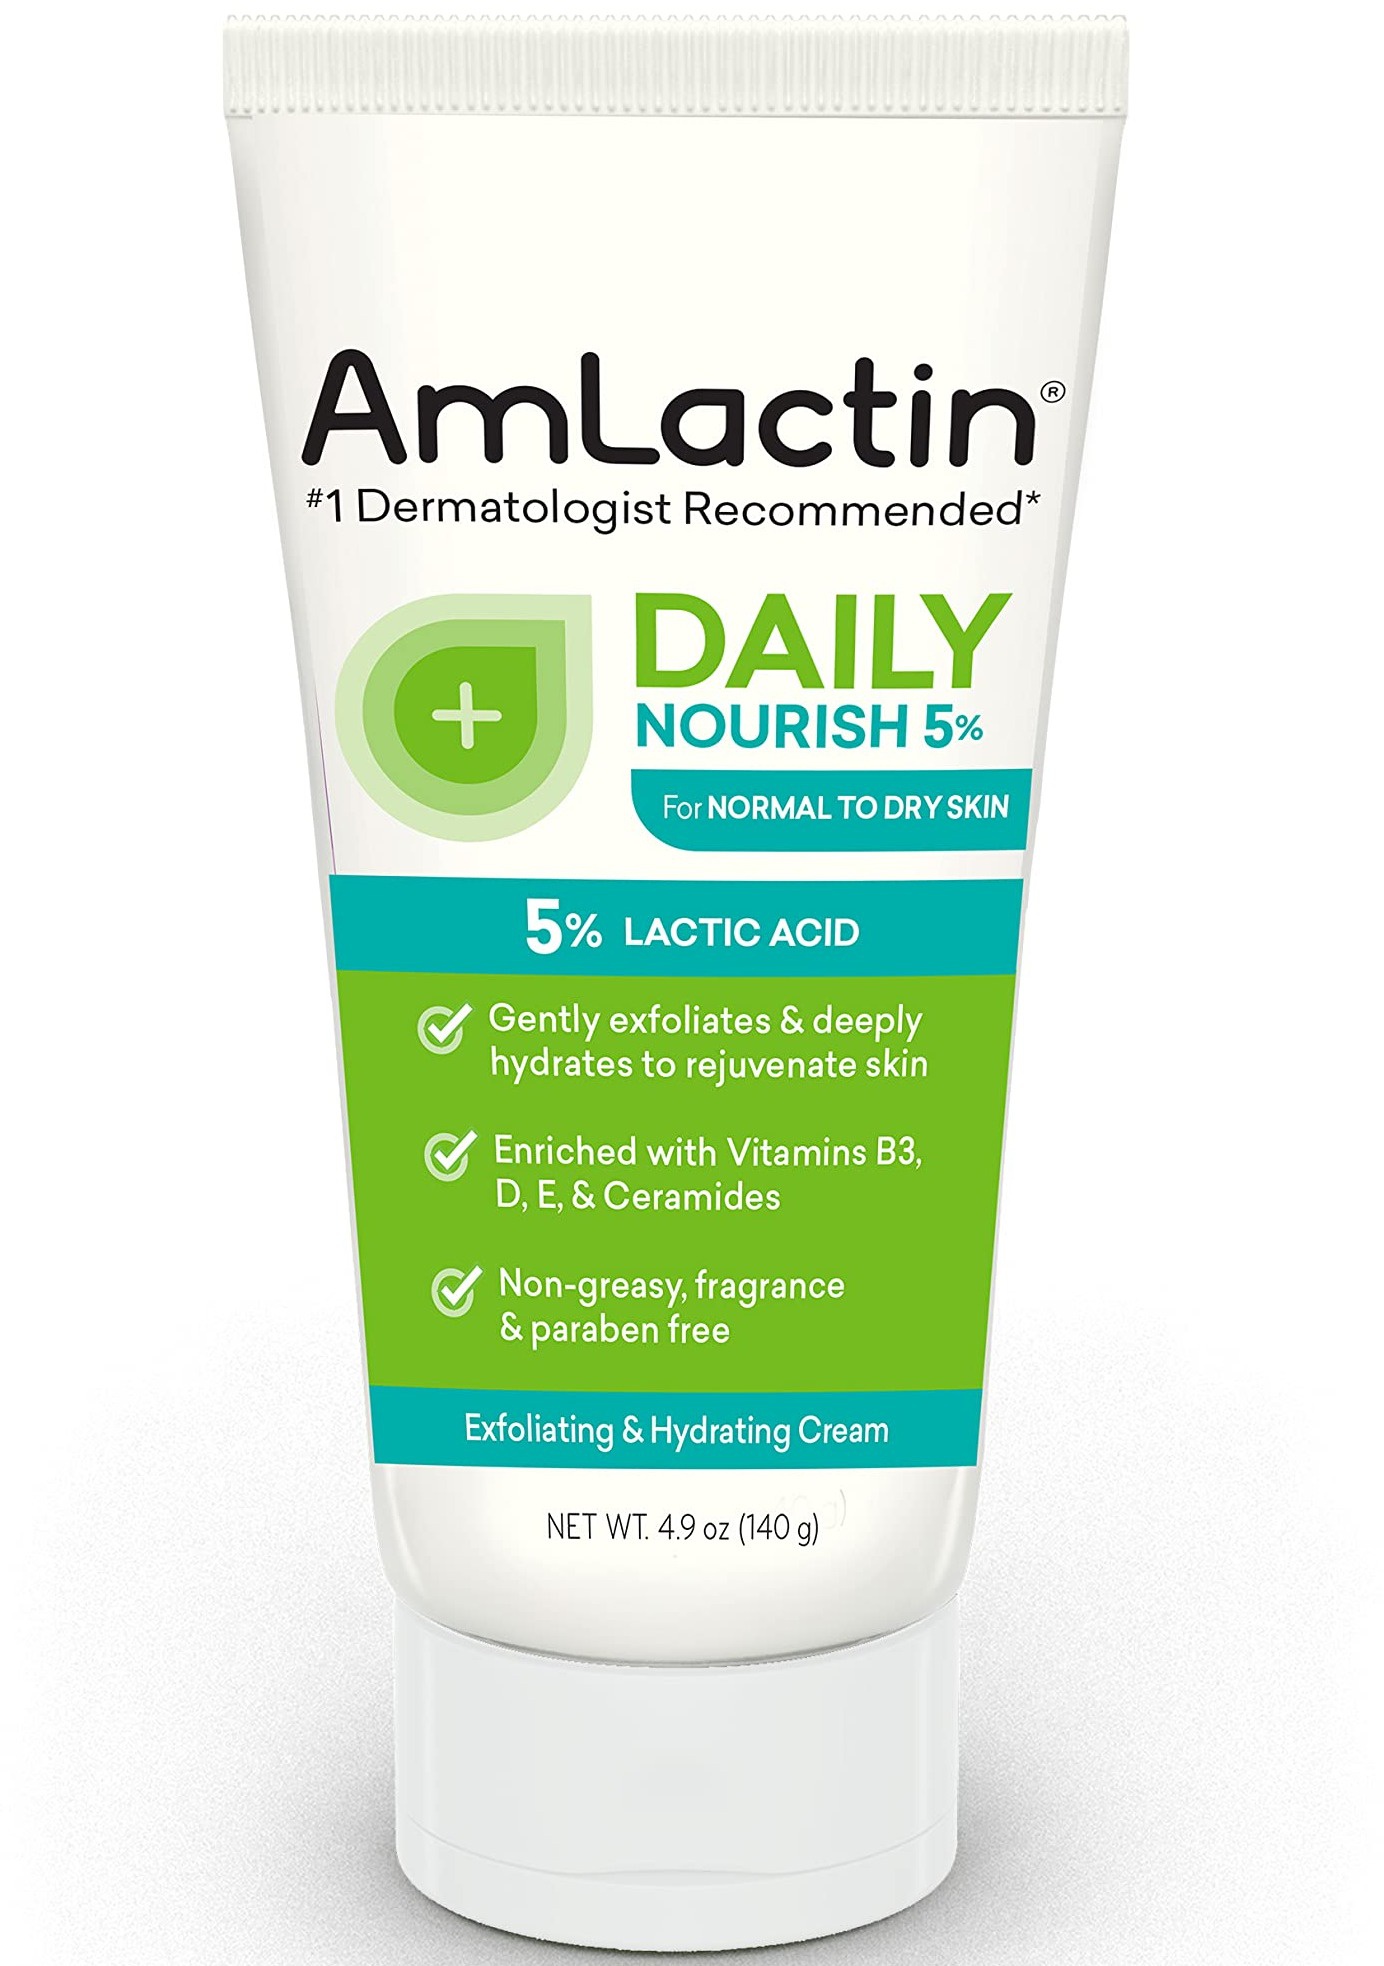 Amlactin Daily Nourish 5% Cream